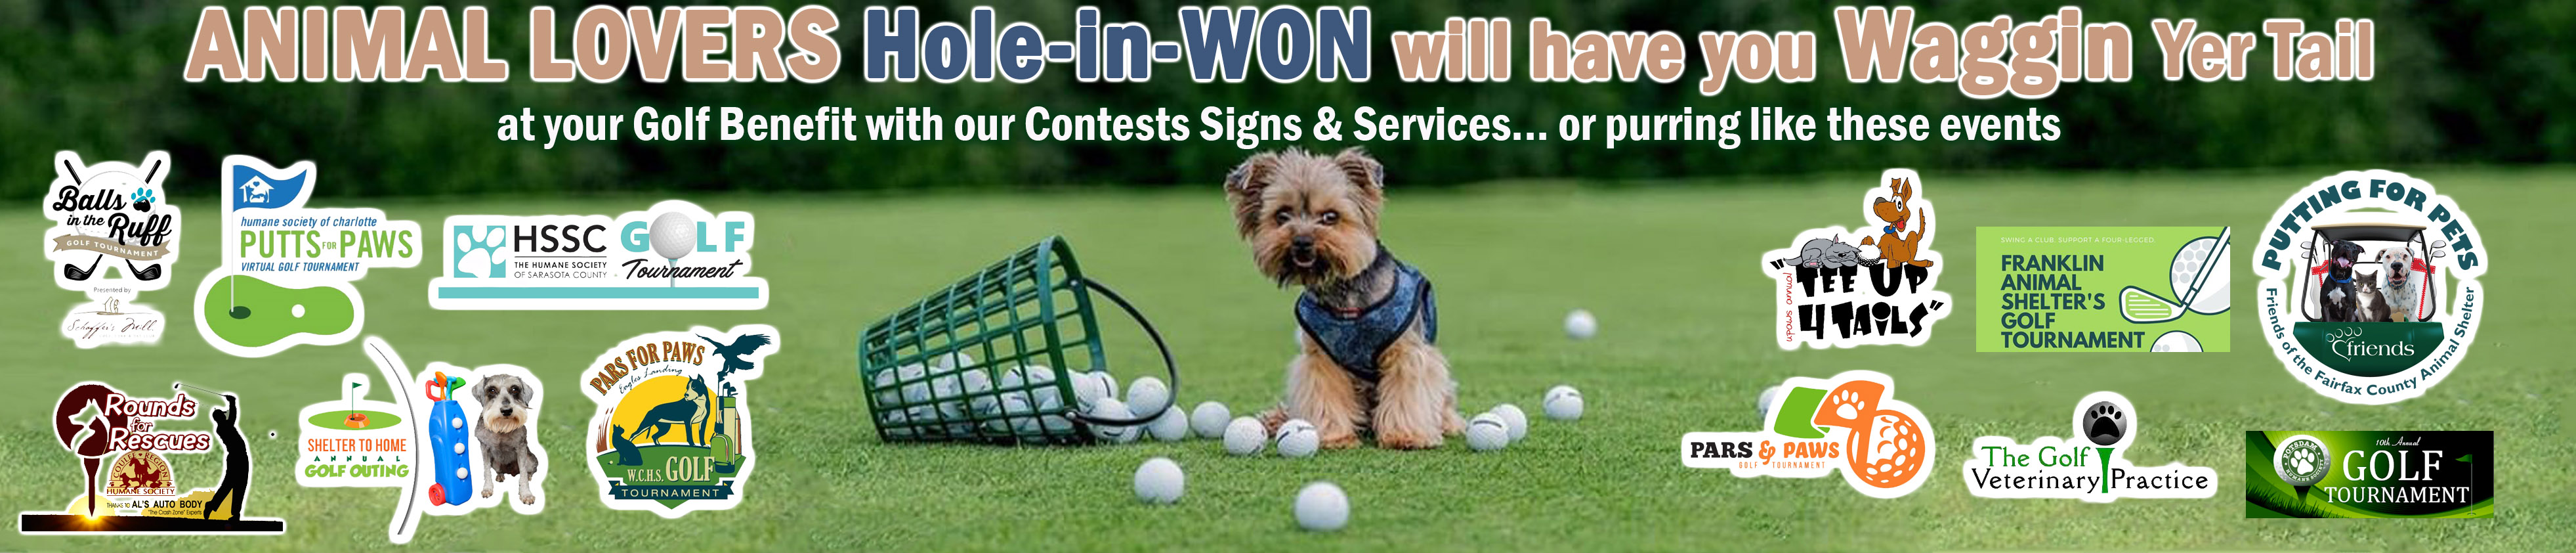 Animal Lovers Golf Tournament Golf Insurance Hole-in-WON.com